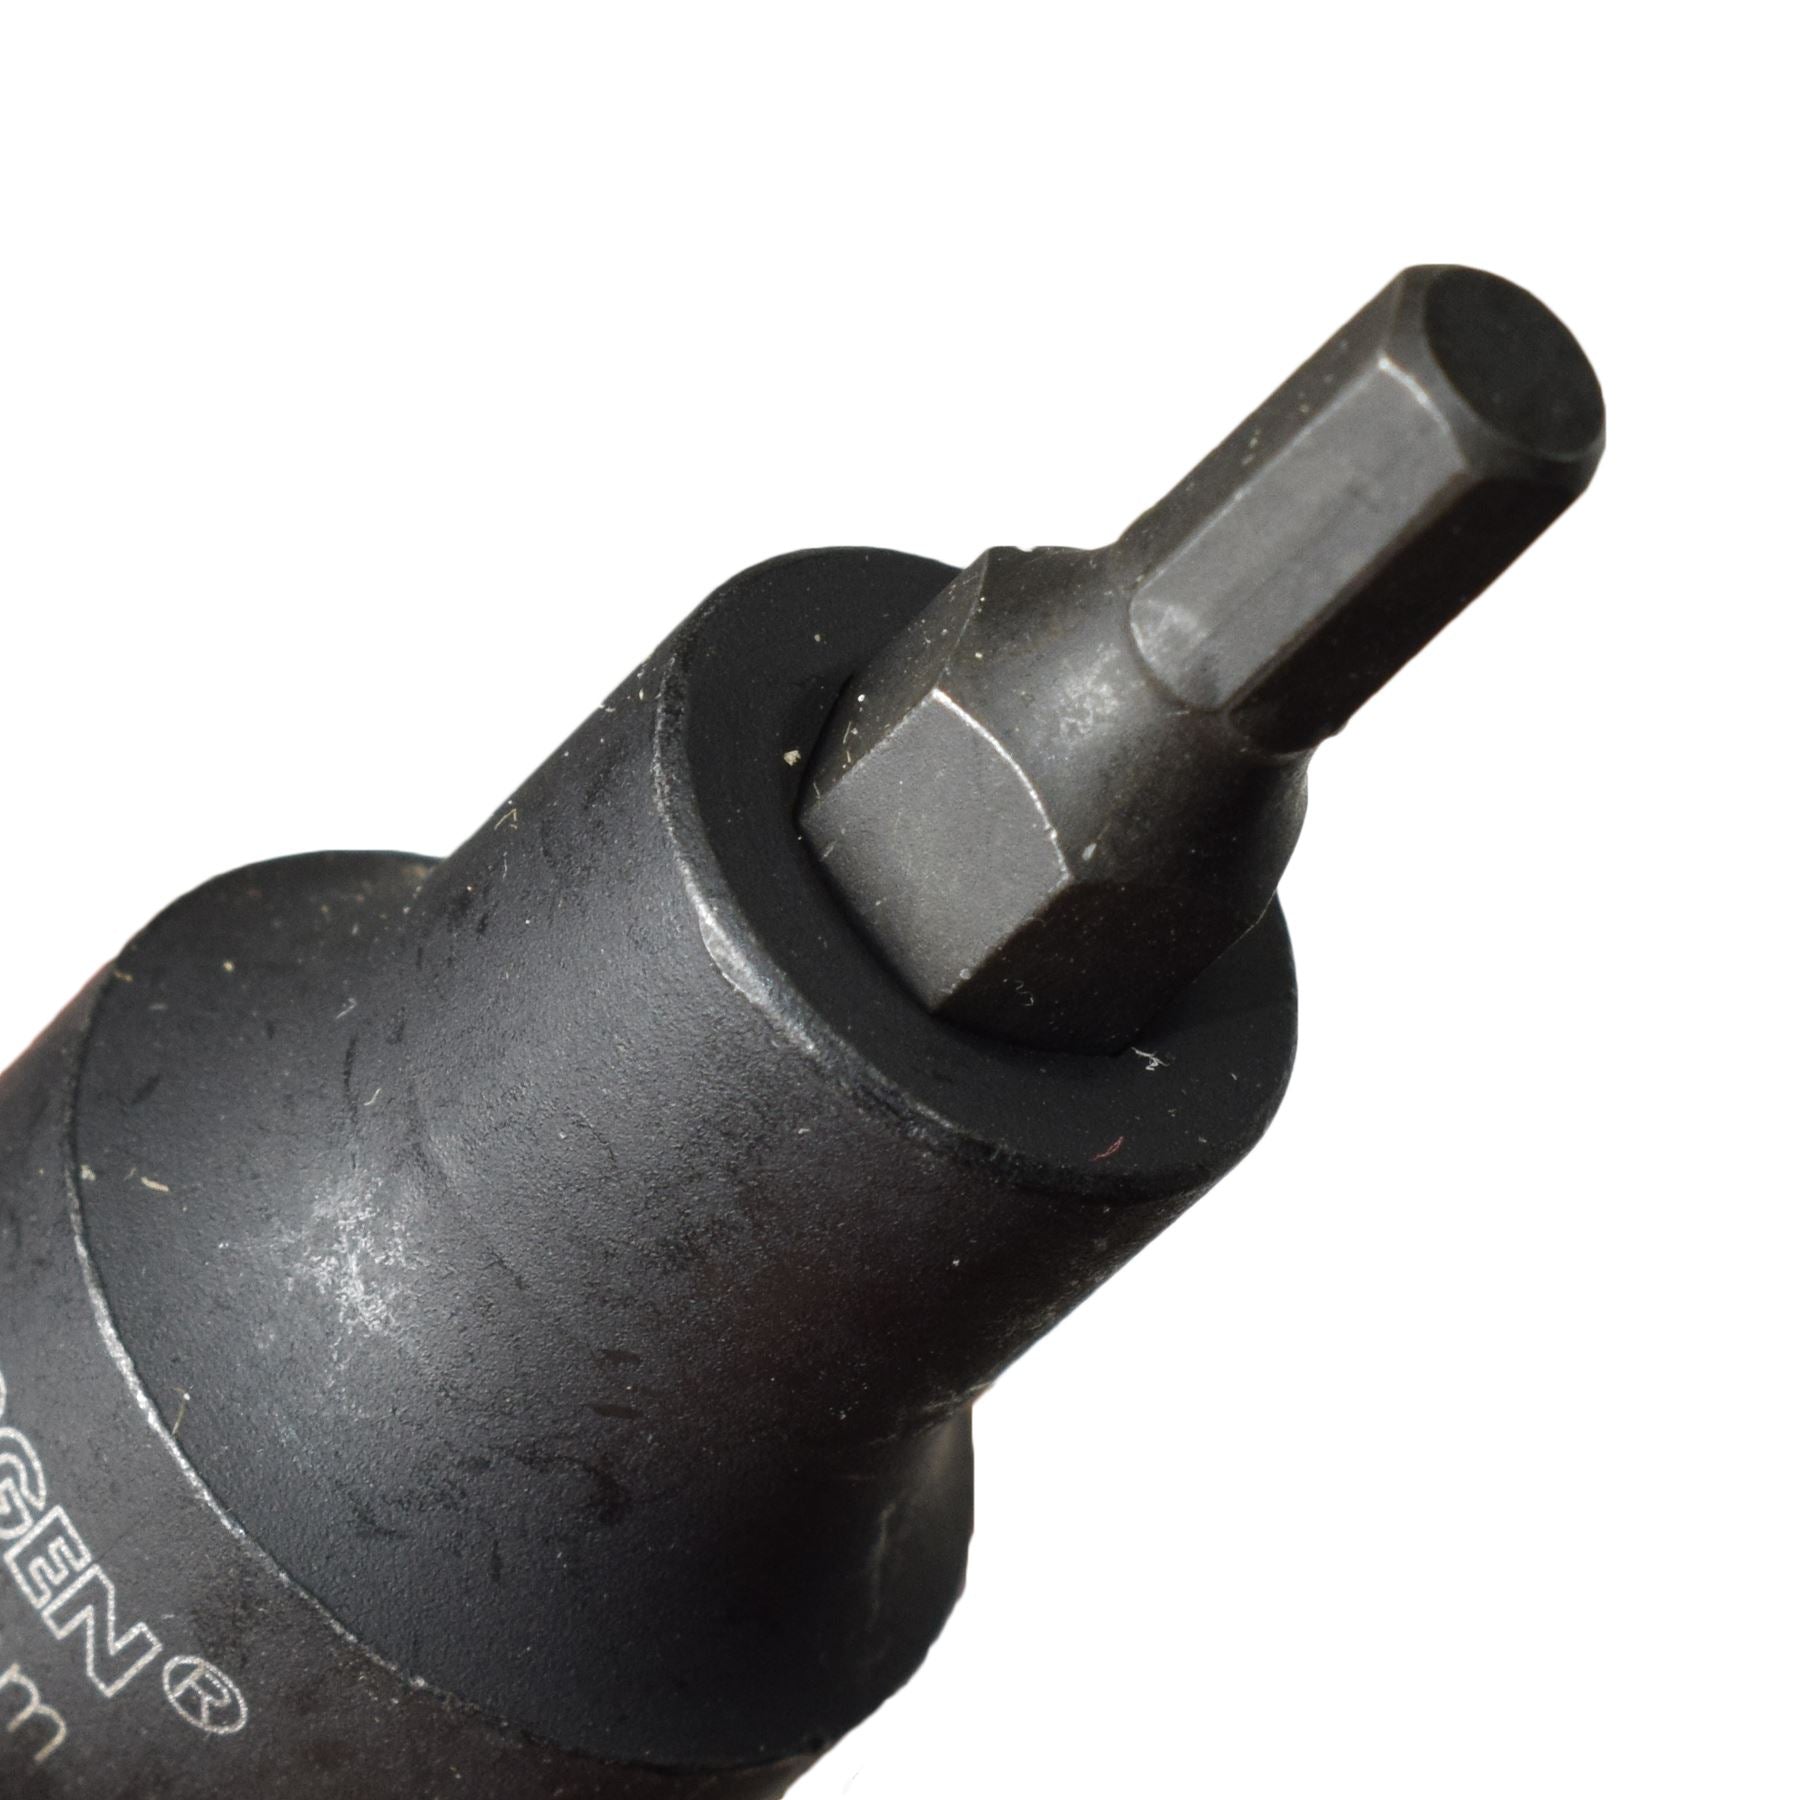 1/2" Drive Metric MM Impacted Allen Hex Key Sockets 5mm – 19mm Short Or Long